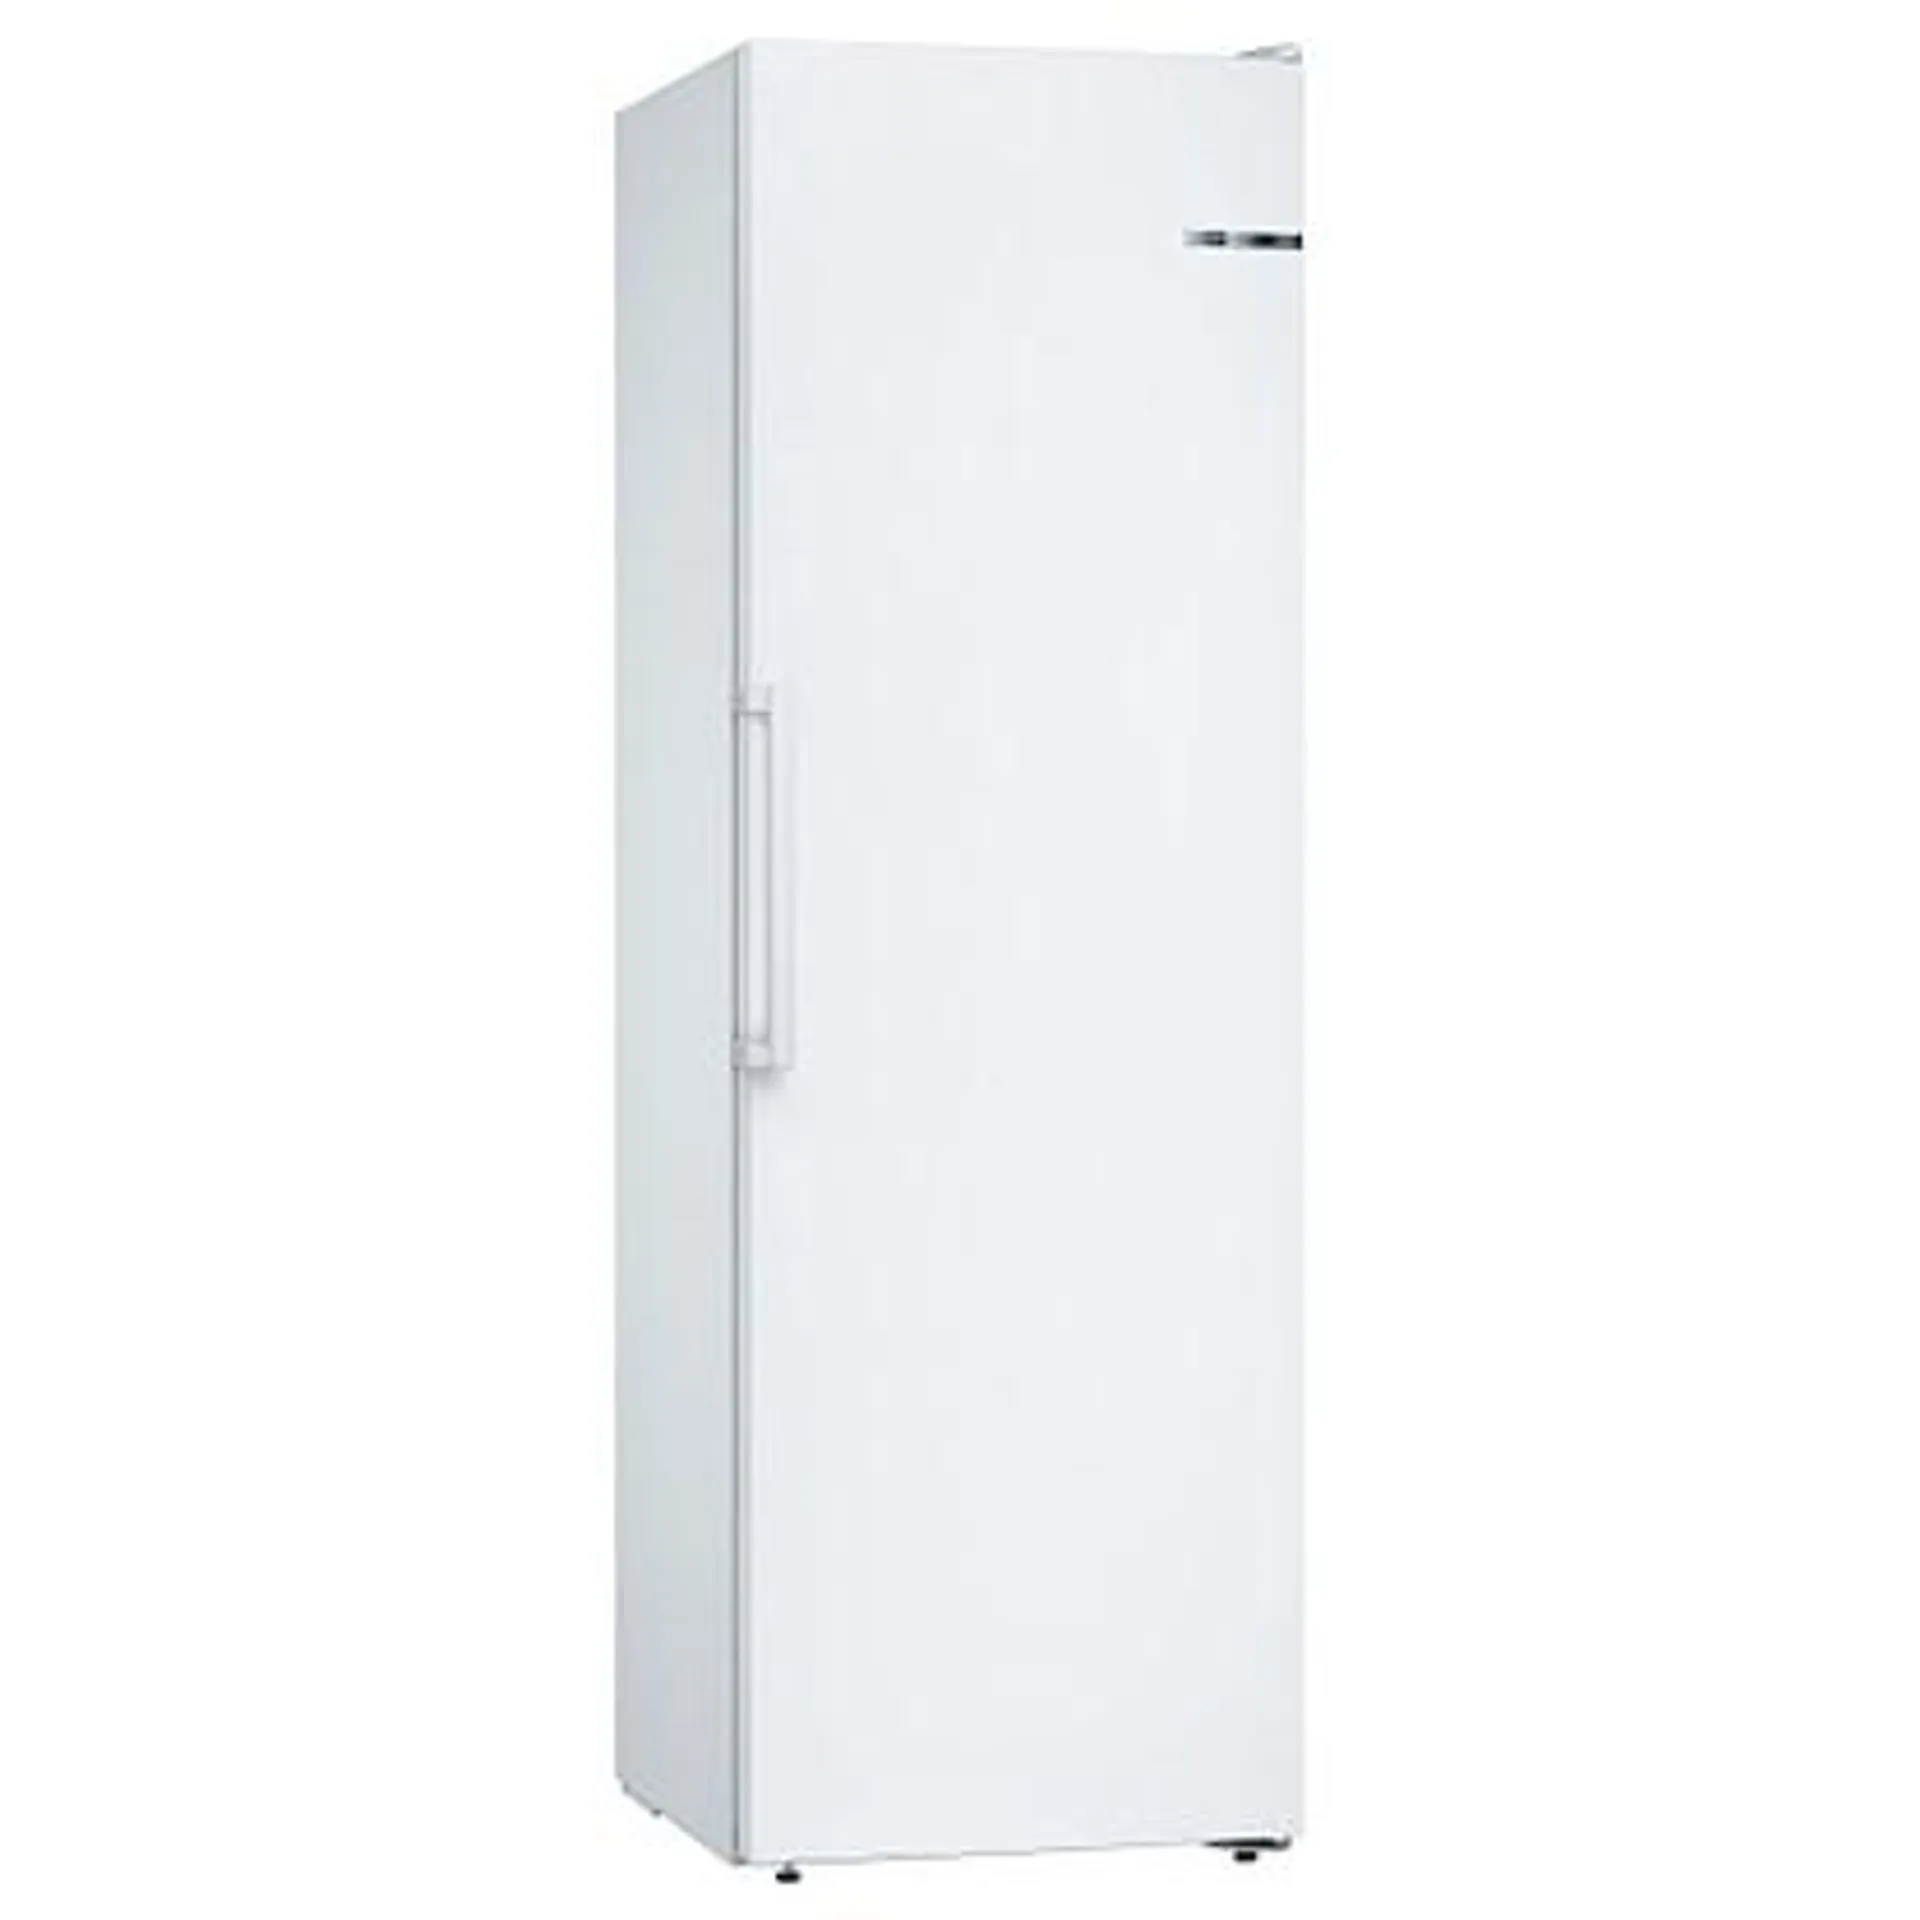 Bosch GSN36VWEPG 60cm Series 4 Freestanding Frost Free Freezer – WHITE